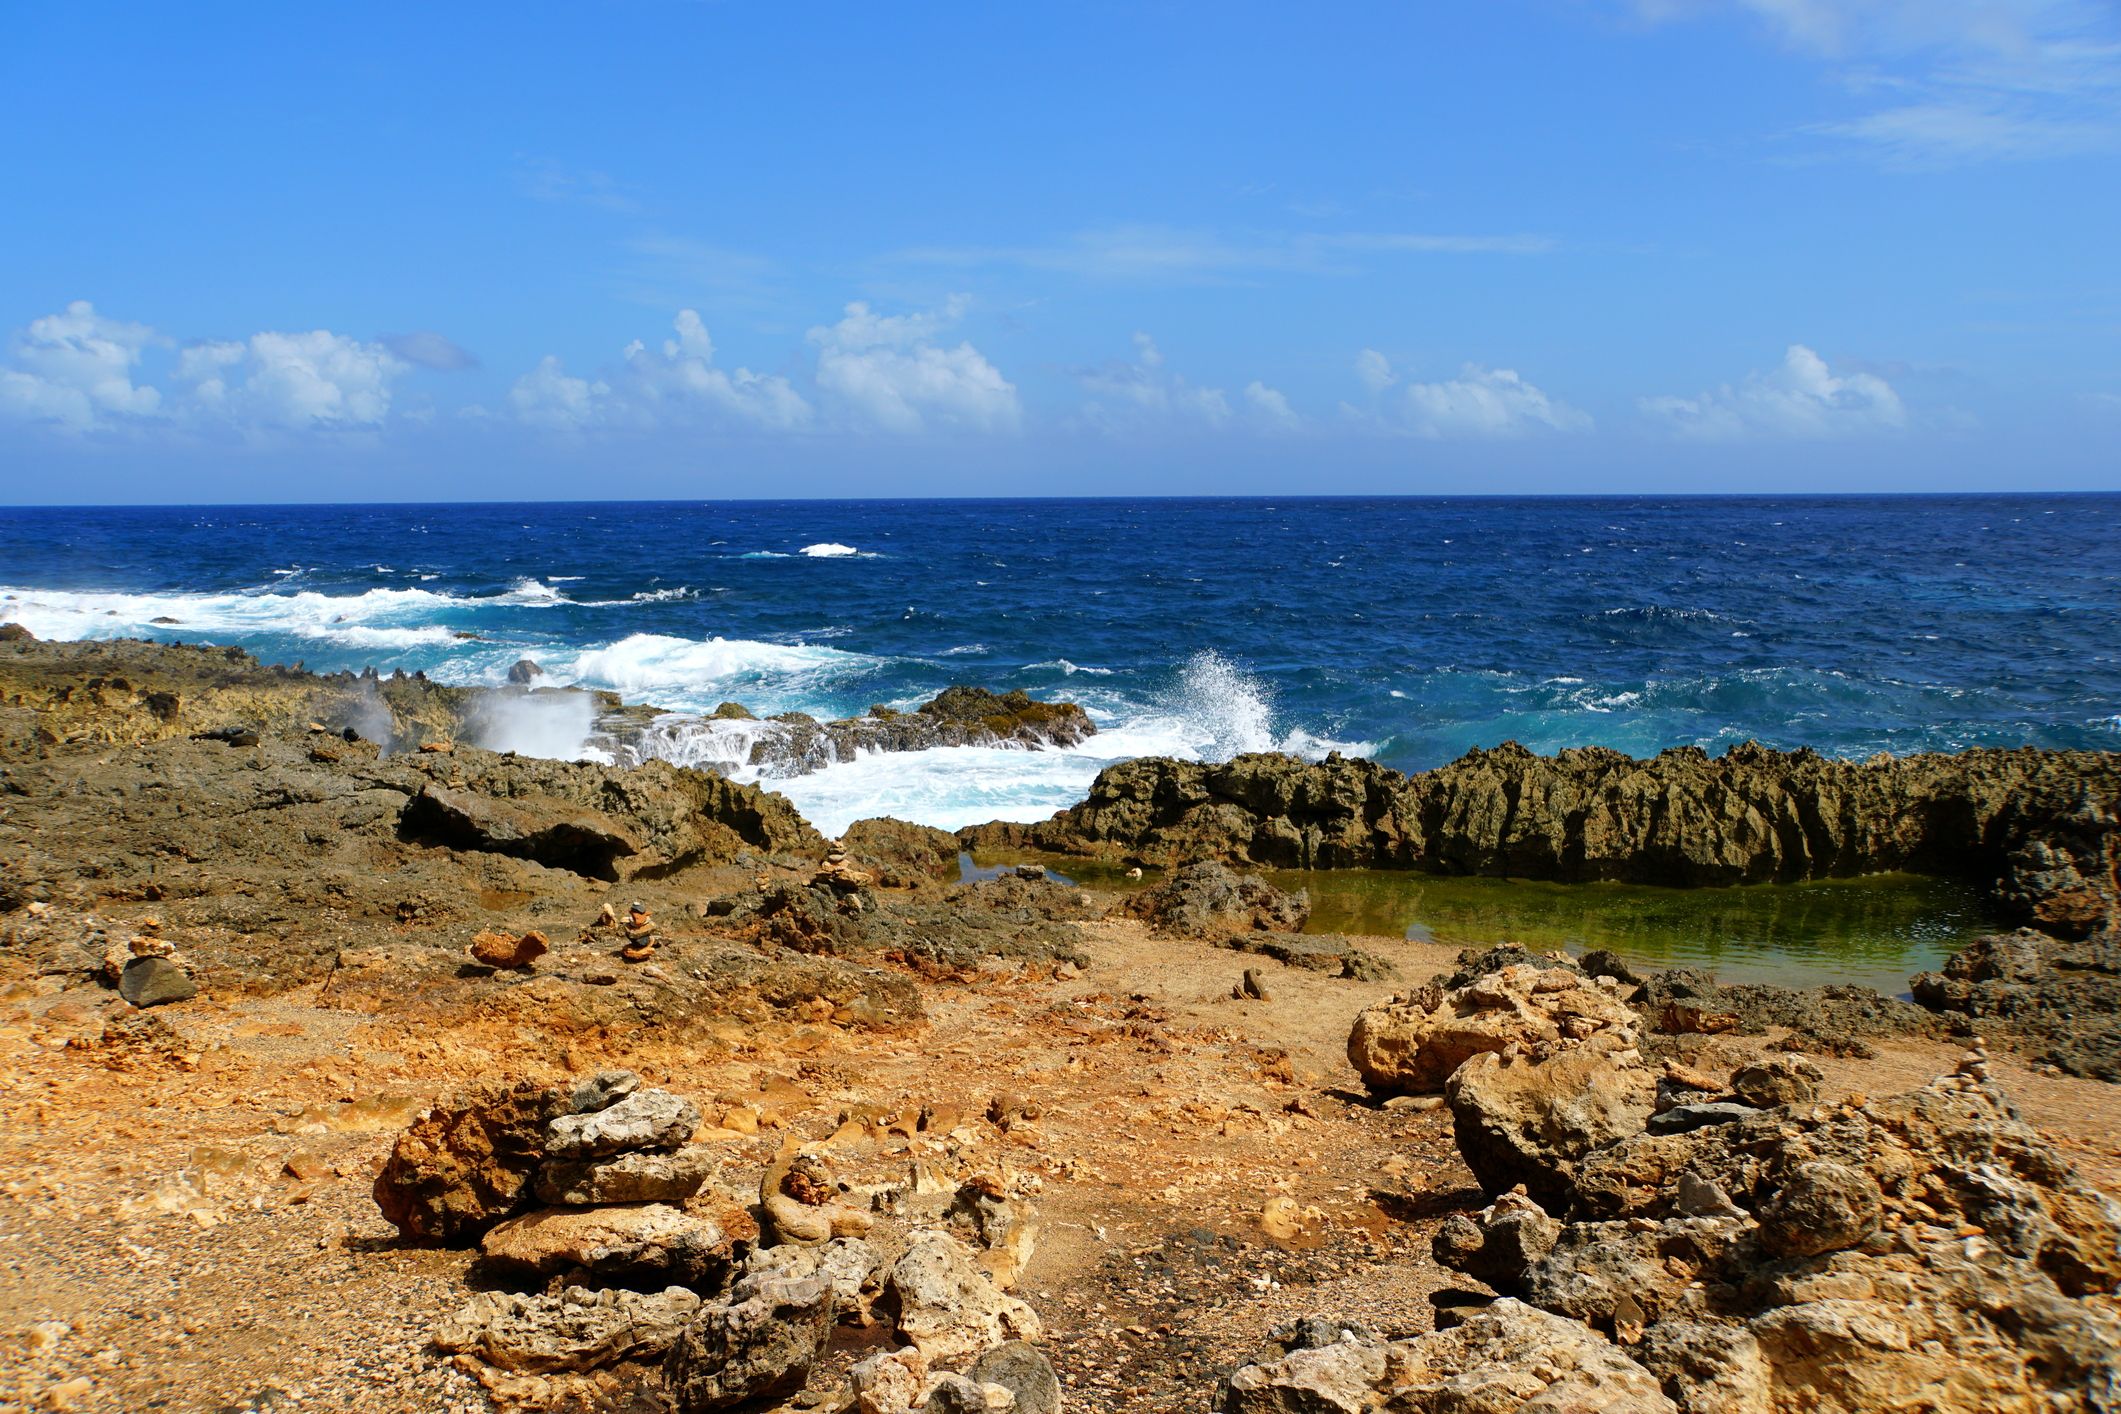  Rocky cliffs with rough waves at Andicuri Beach, Aruba